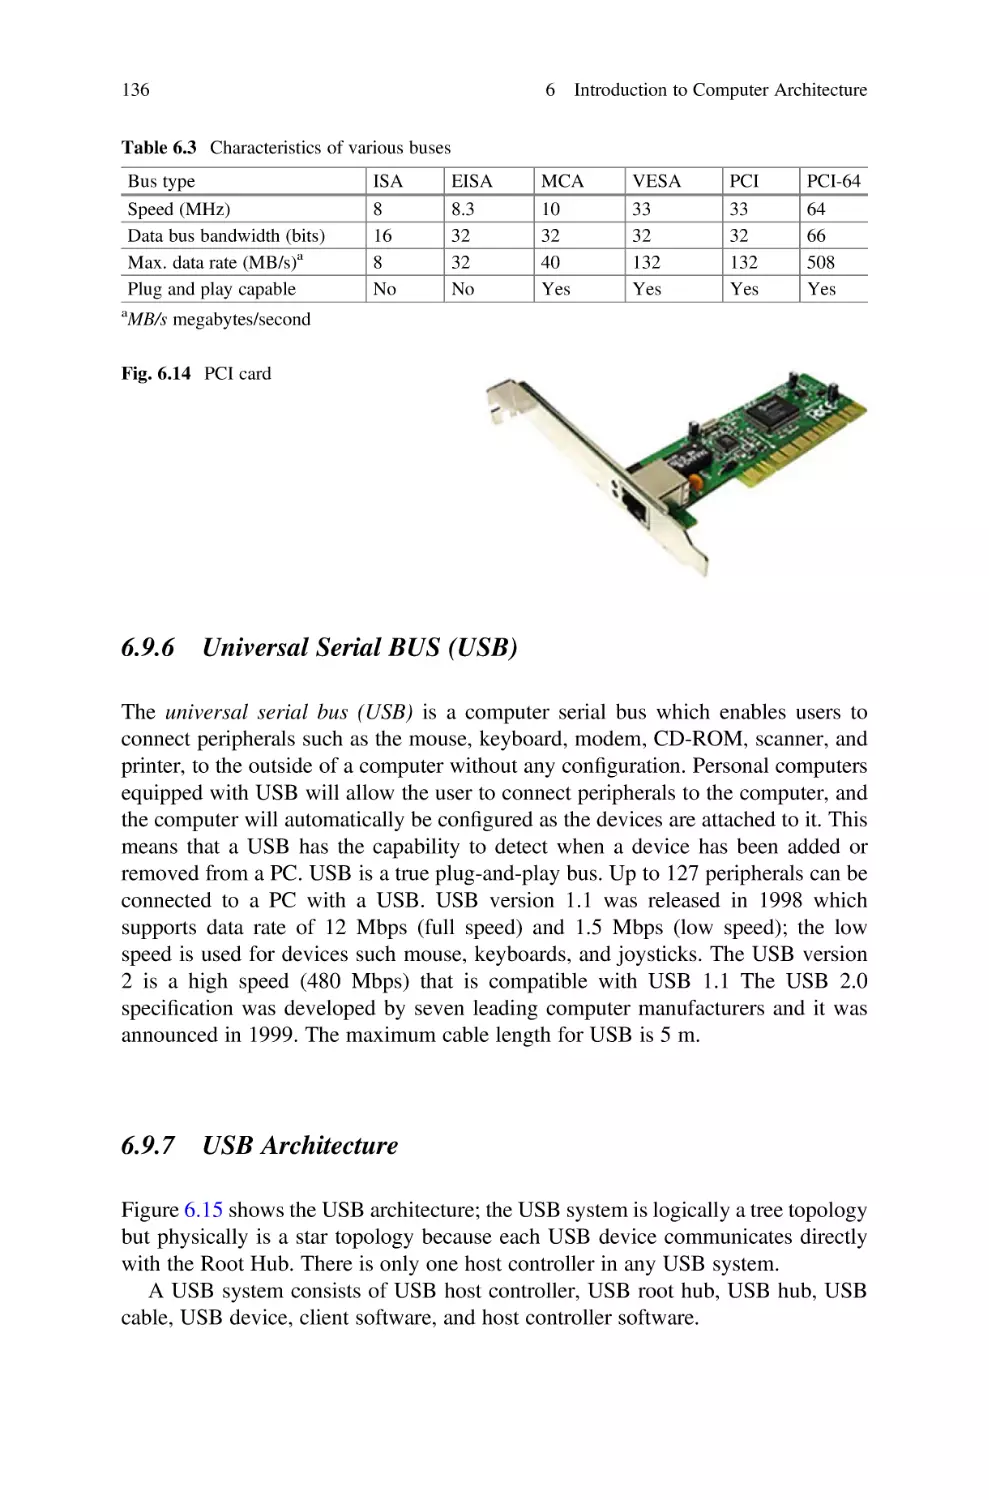 6.9.6 Universal Serial BUS (USB)
6.9.7 USB Architecture